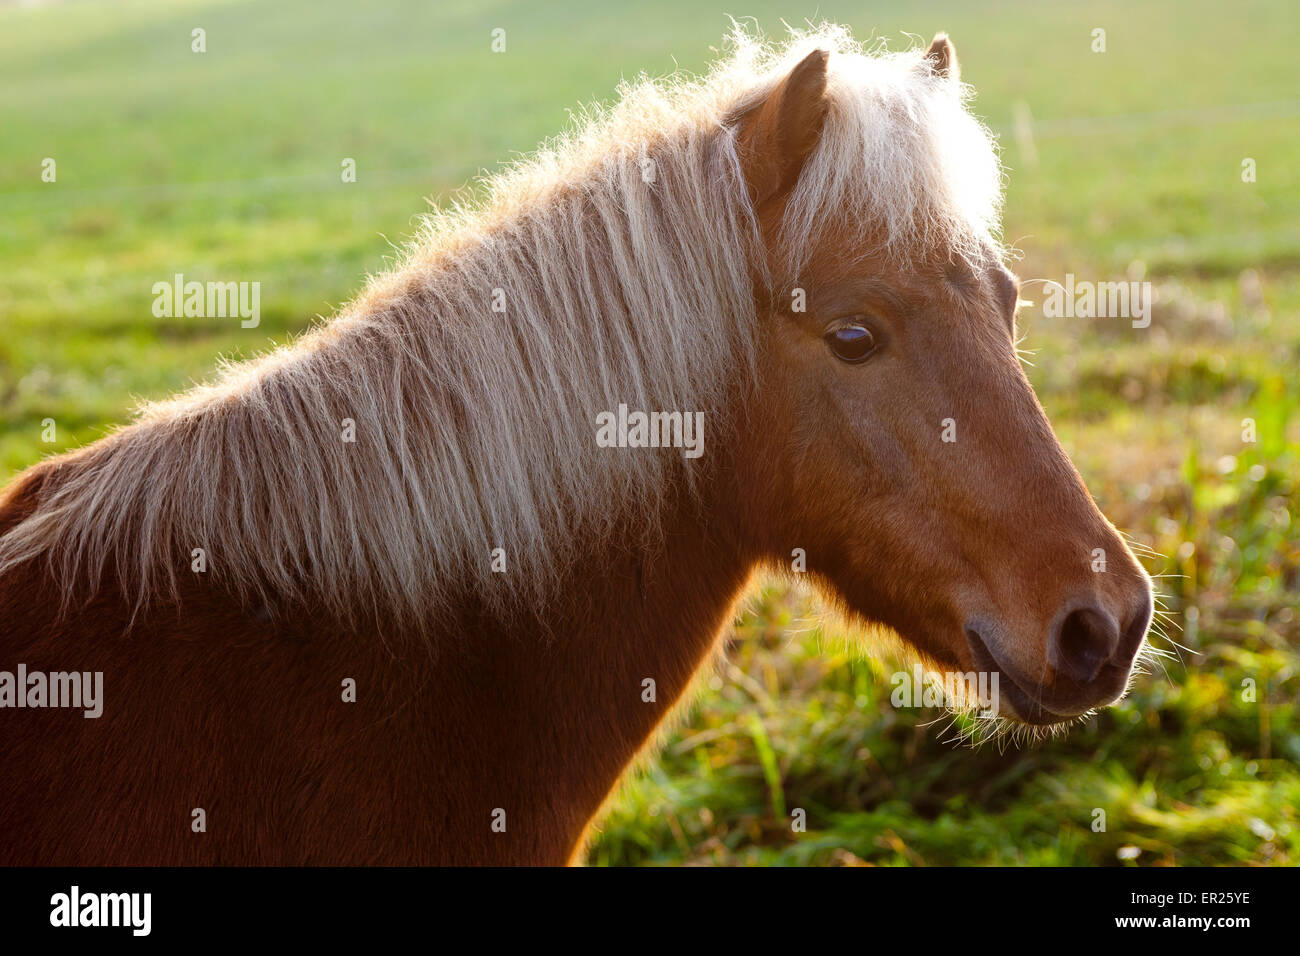 Europa, en Alemania, en Renania del Norte-Westfalia, pony en una pradera. Europa, Deutschland, Nordrhein-Westfalen, Pony auf einer Wiese. Foto de stock